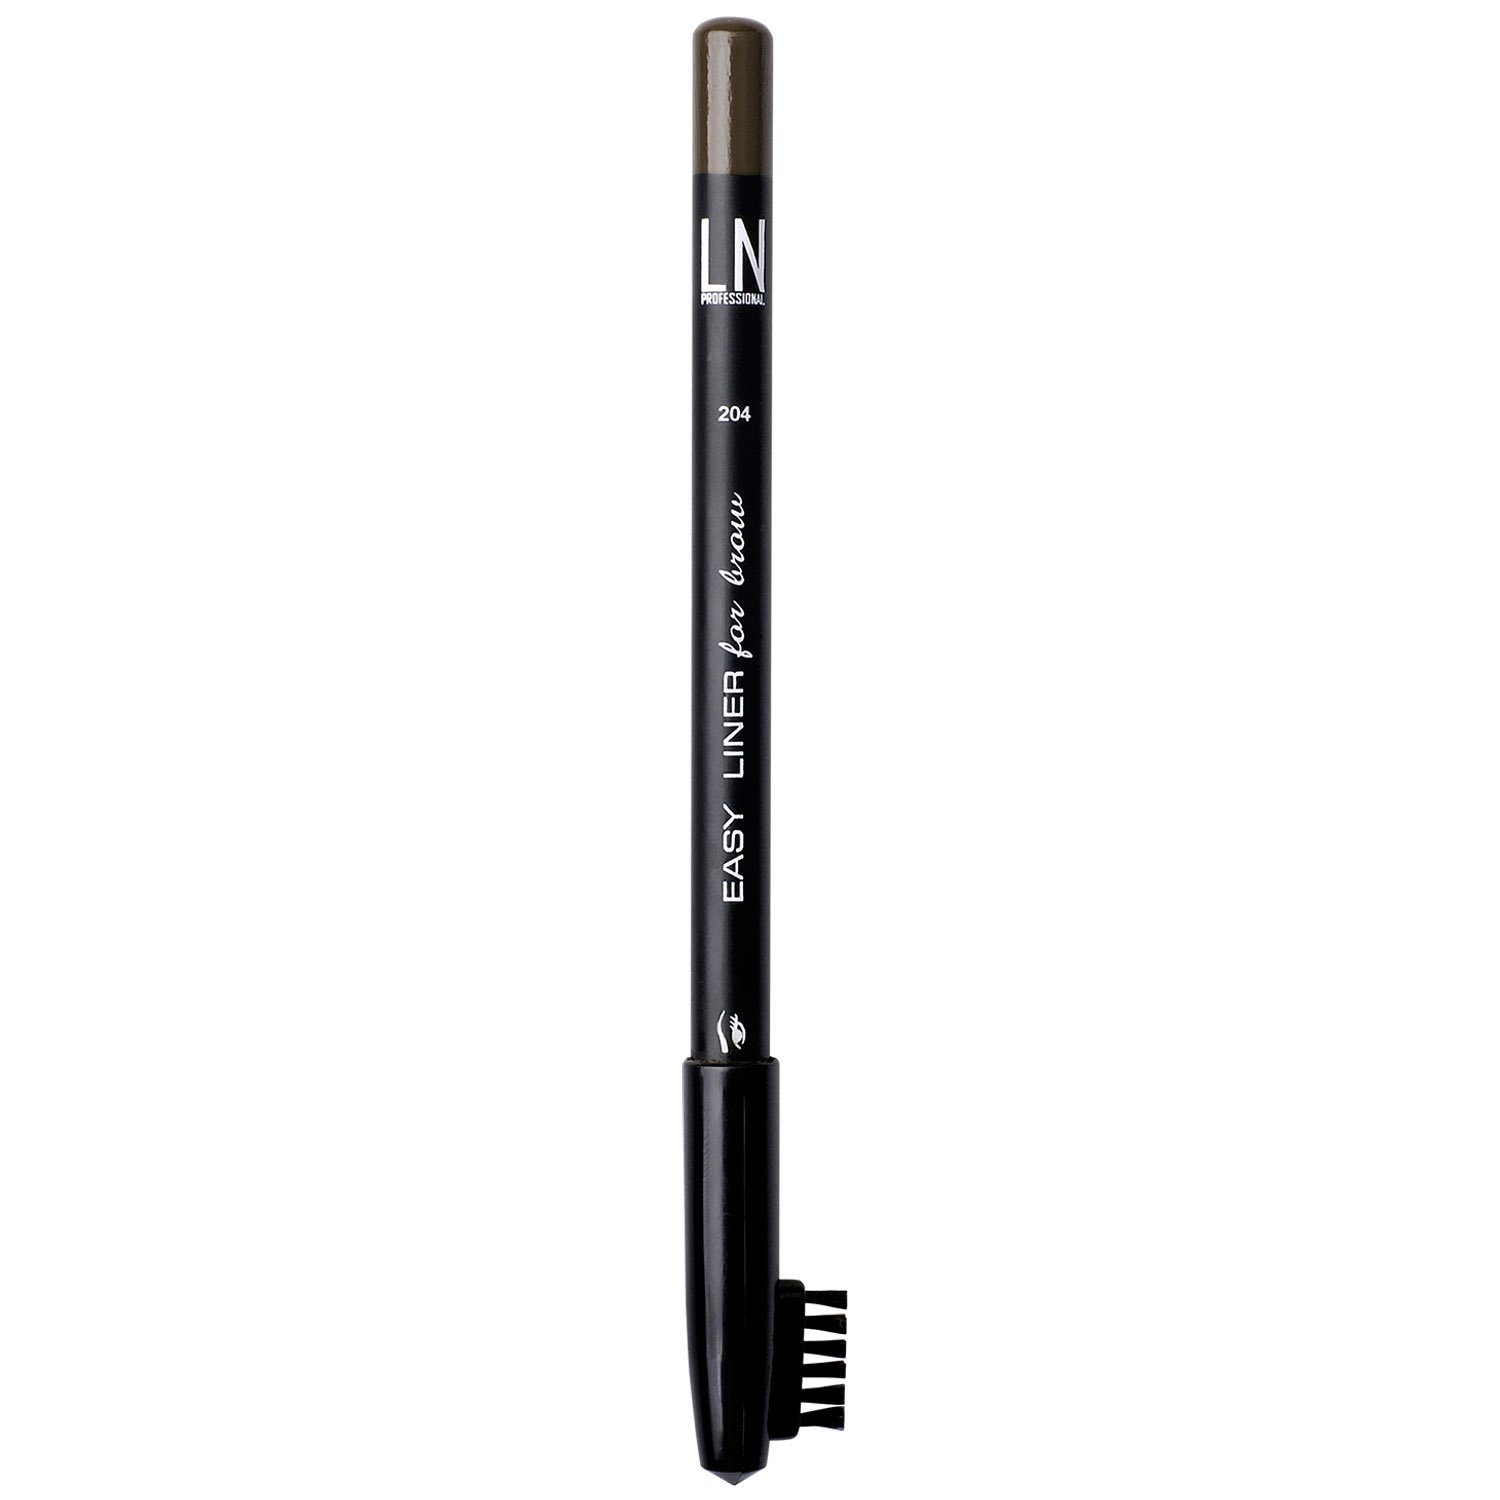 Карандаш для бровей LN Professional Easy Liner Brow Pencil тон 204, 1.7 г - фото 1